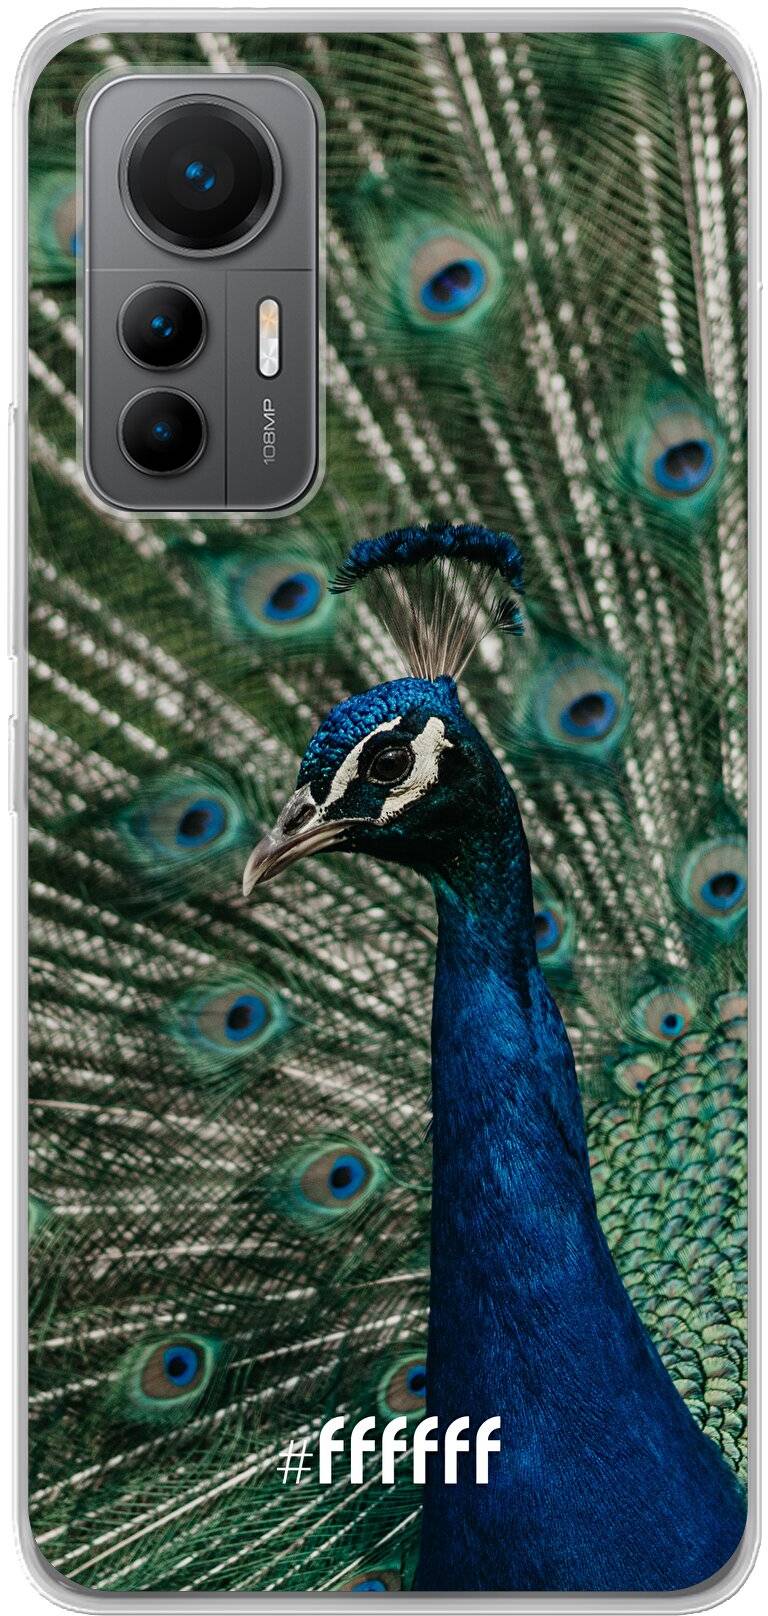 Peacock 12 Lite